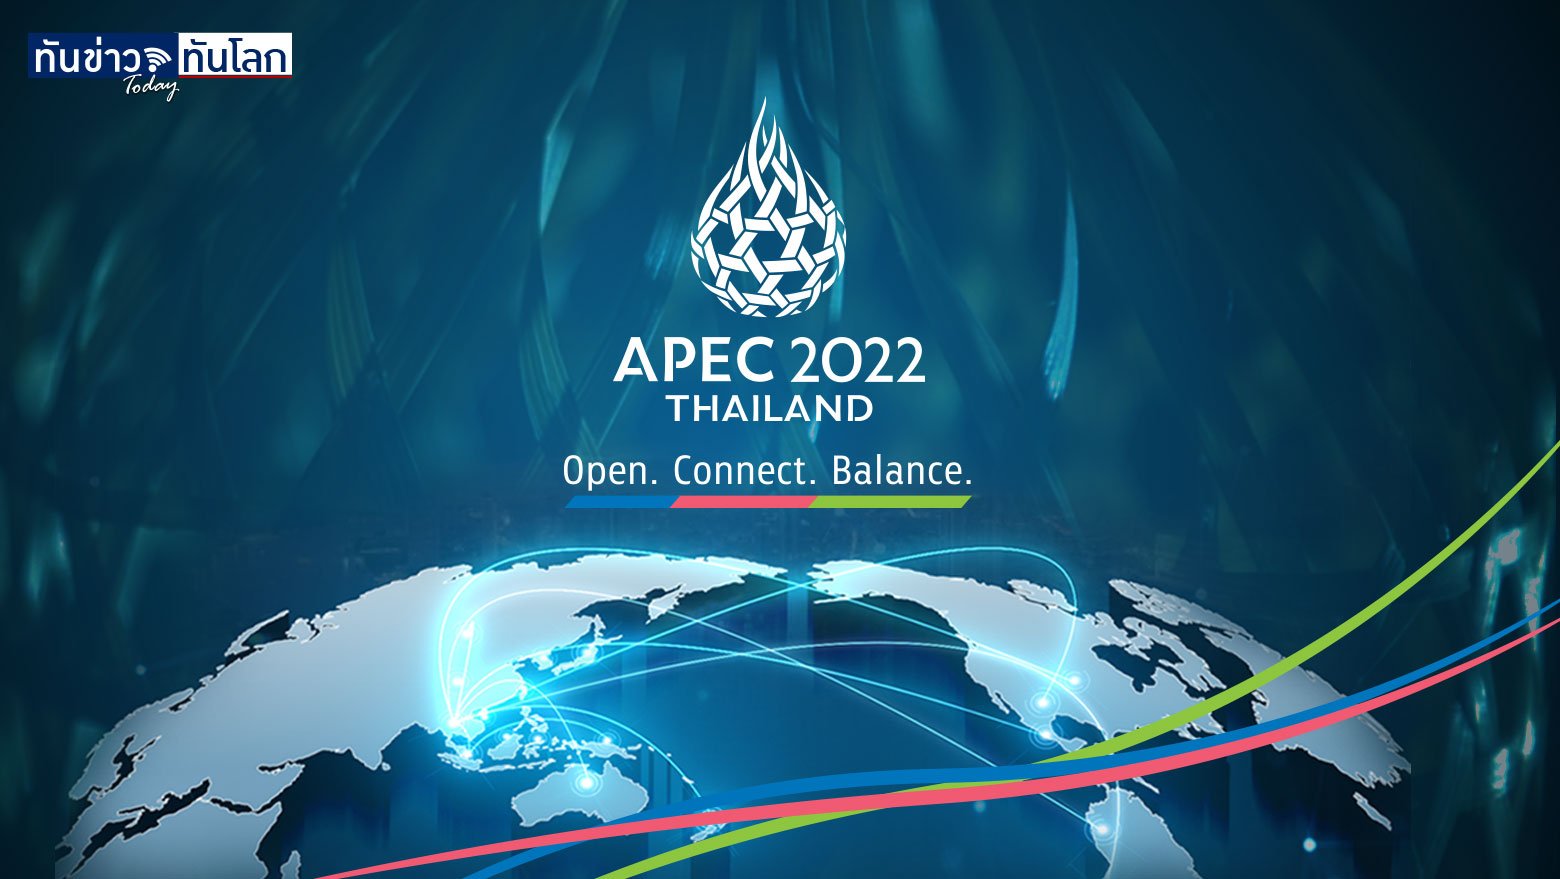 APEC 2022 Thailand Handover